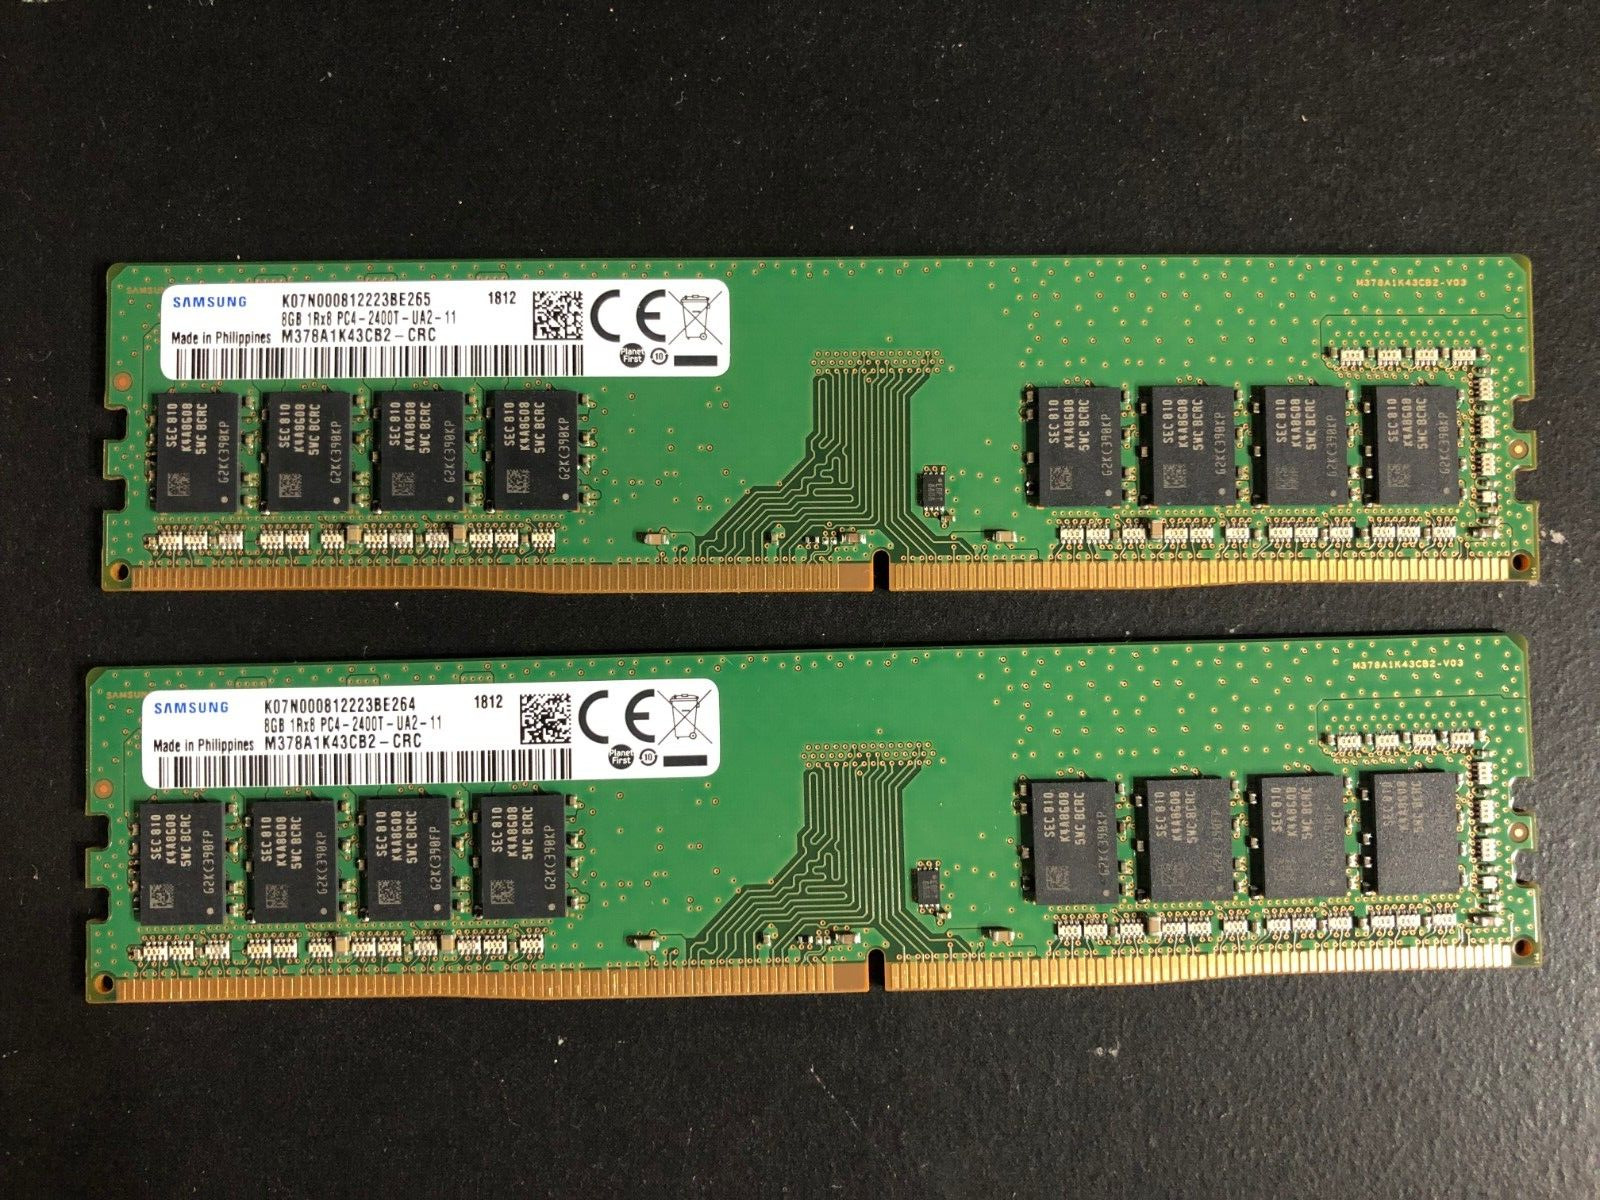 Pair of Samsung 8GB 1Rx8 PC4-2400T-UA2-11 K07N000812223BE265 Memory Modules